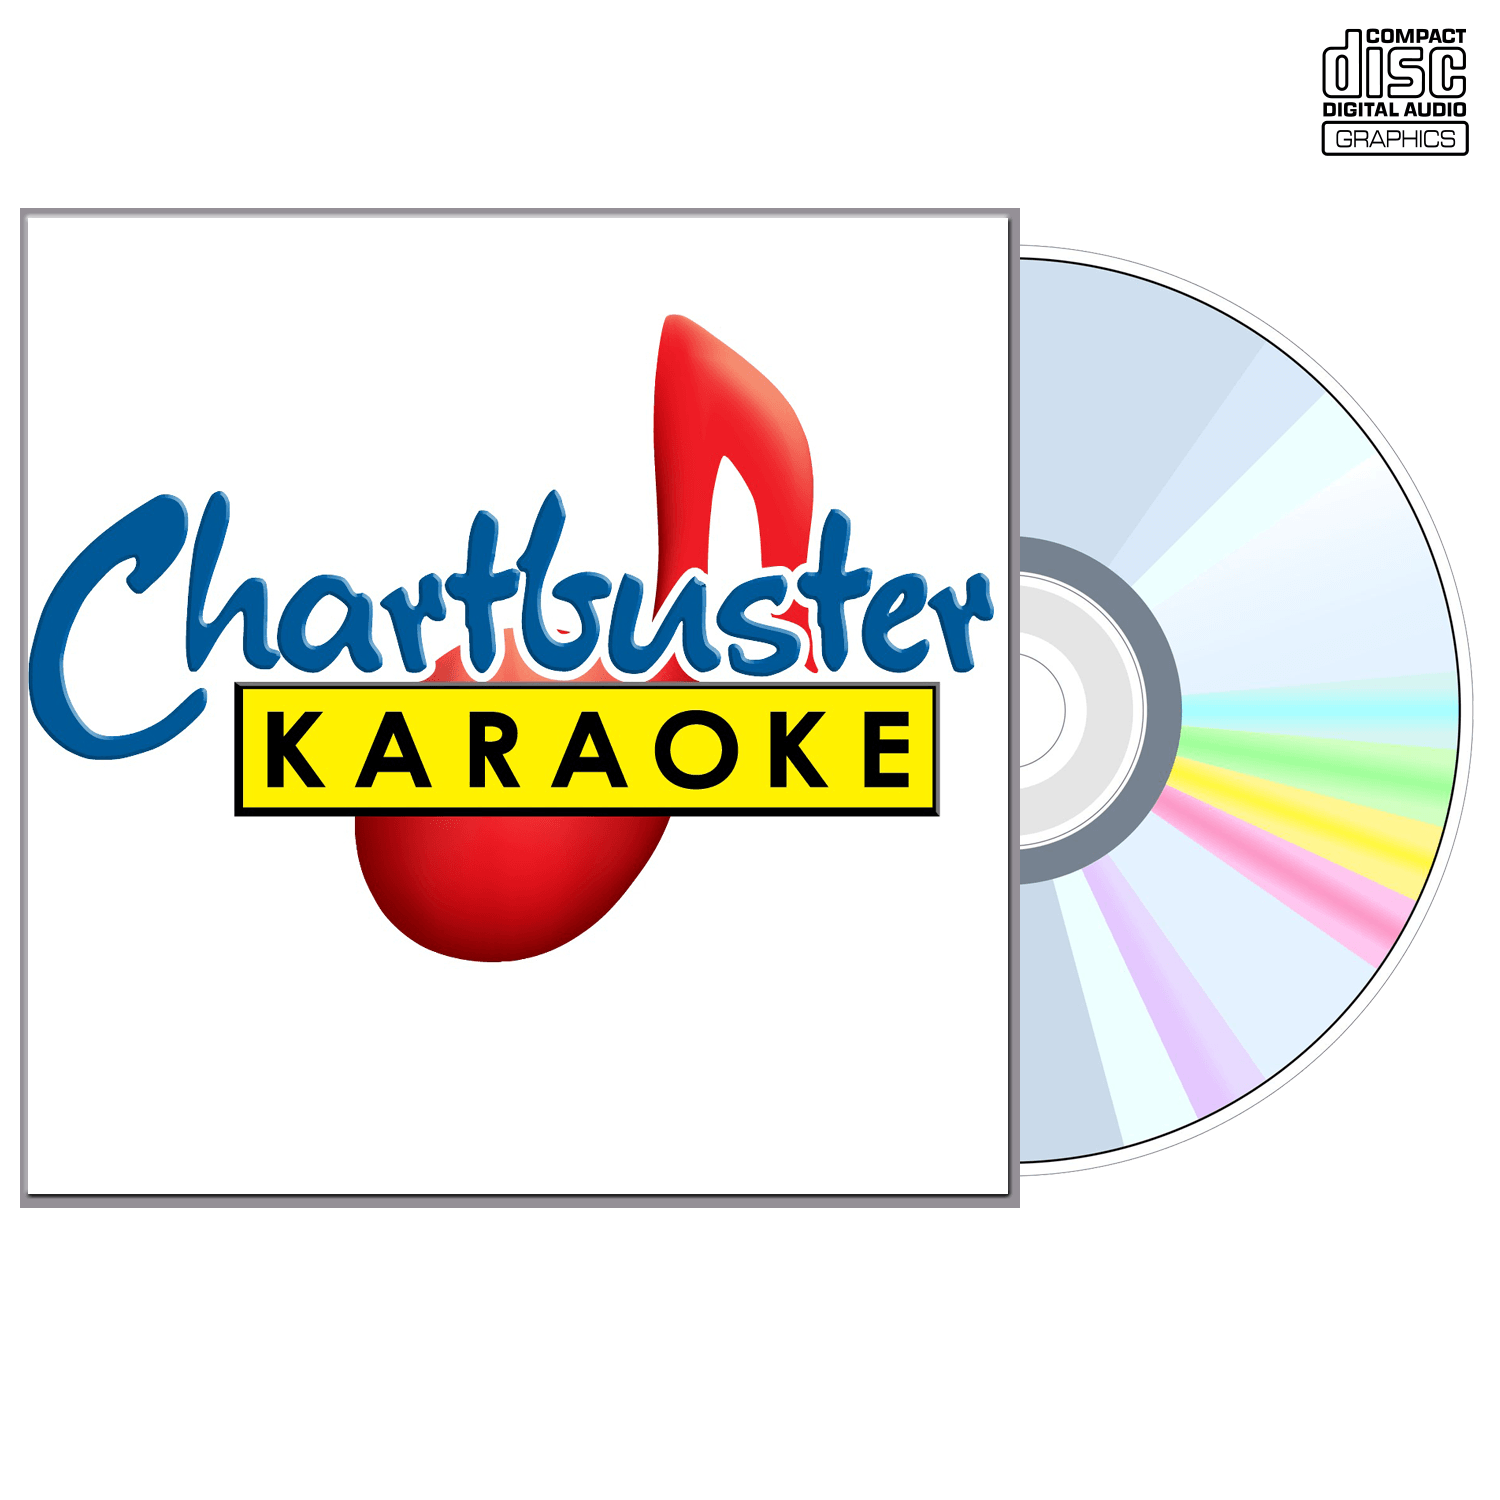 Kellie Pickler - CD+G - Chartbuster Karaoke - Karaoke Home Entertainment